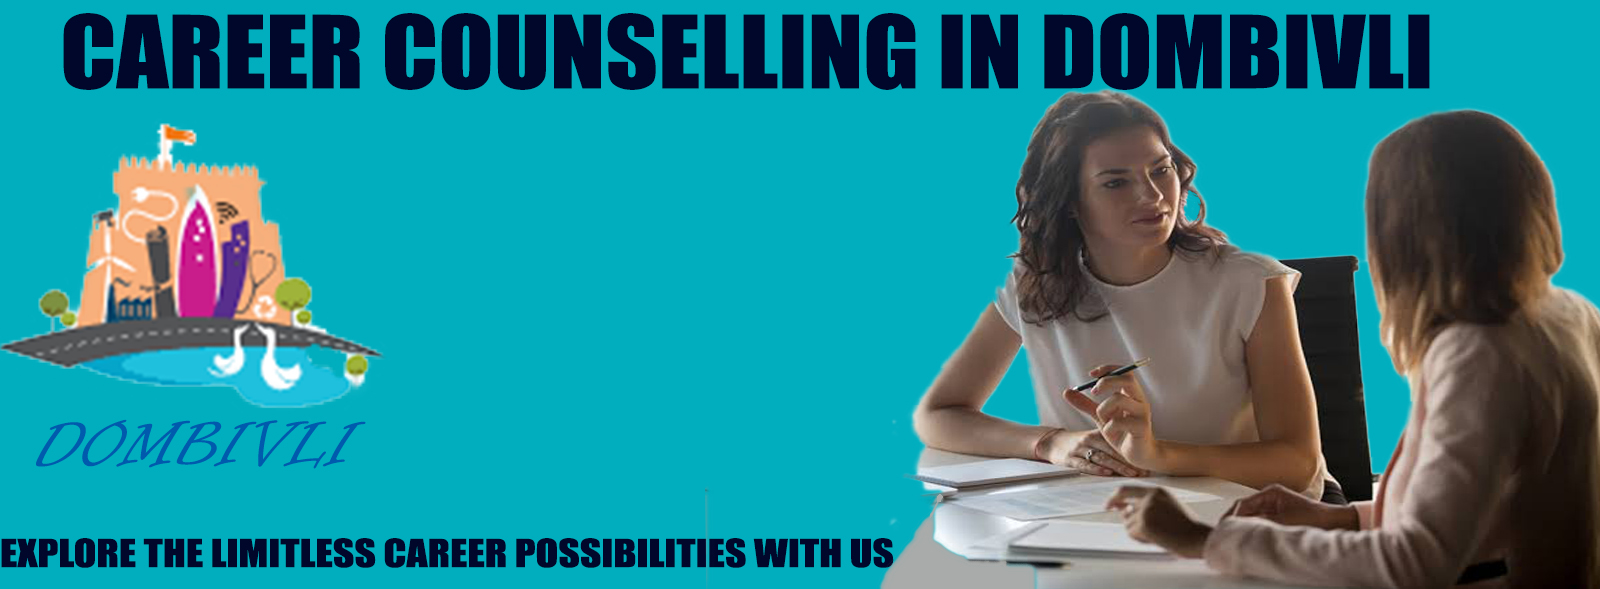 career counselling in doonbivali